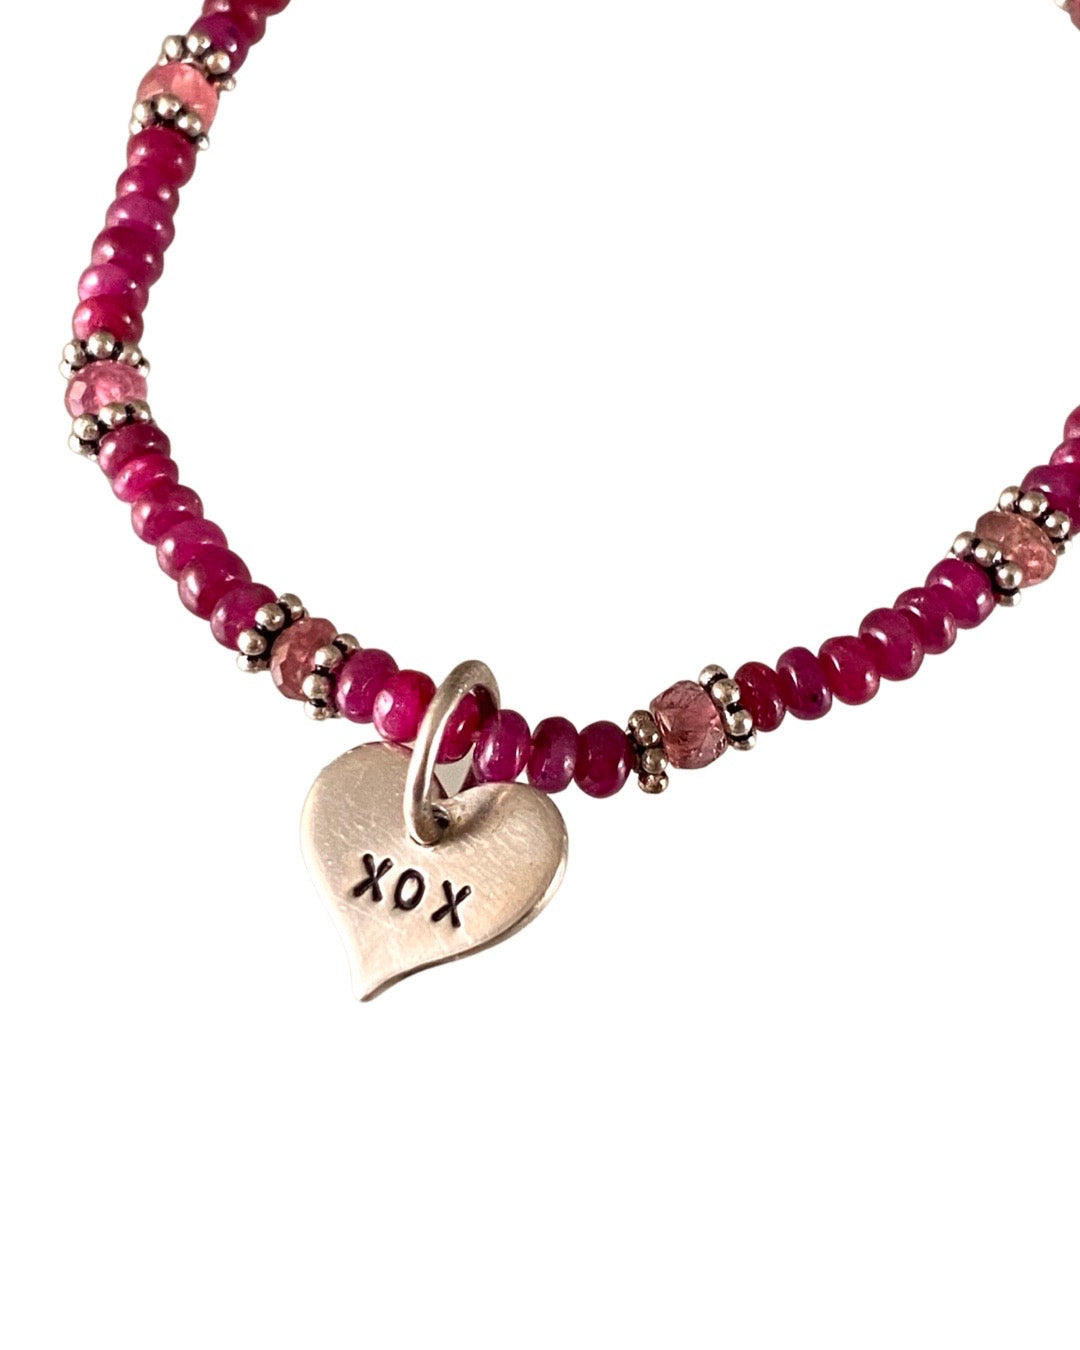 Ruby & Pink Tourmaline Beaded Toggle Bracelet